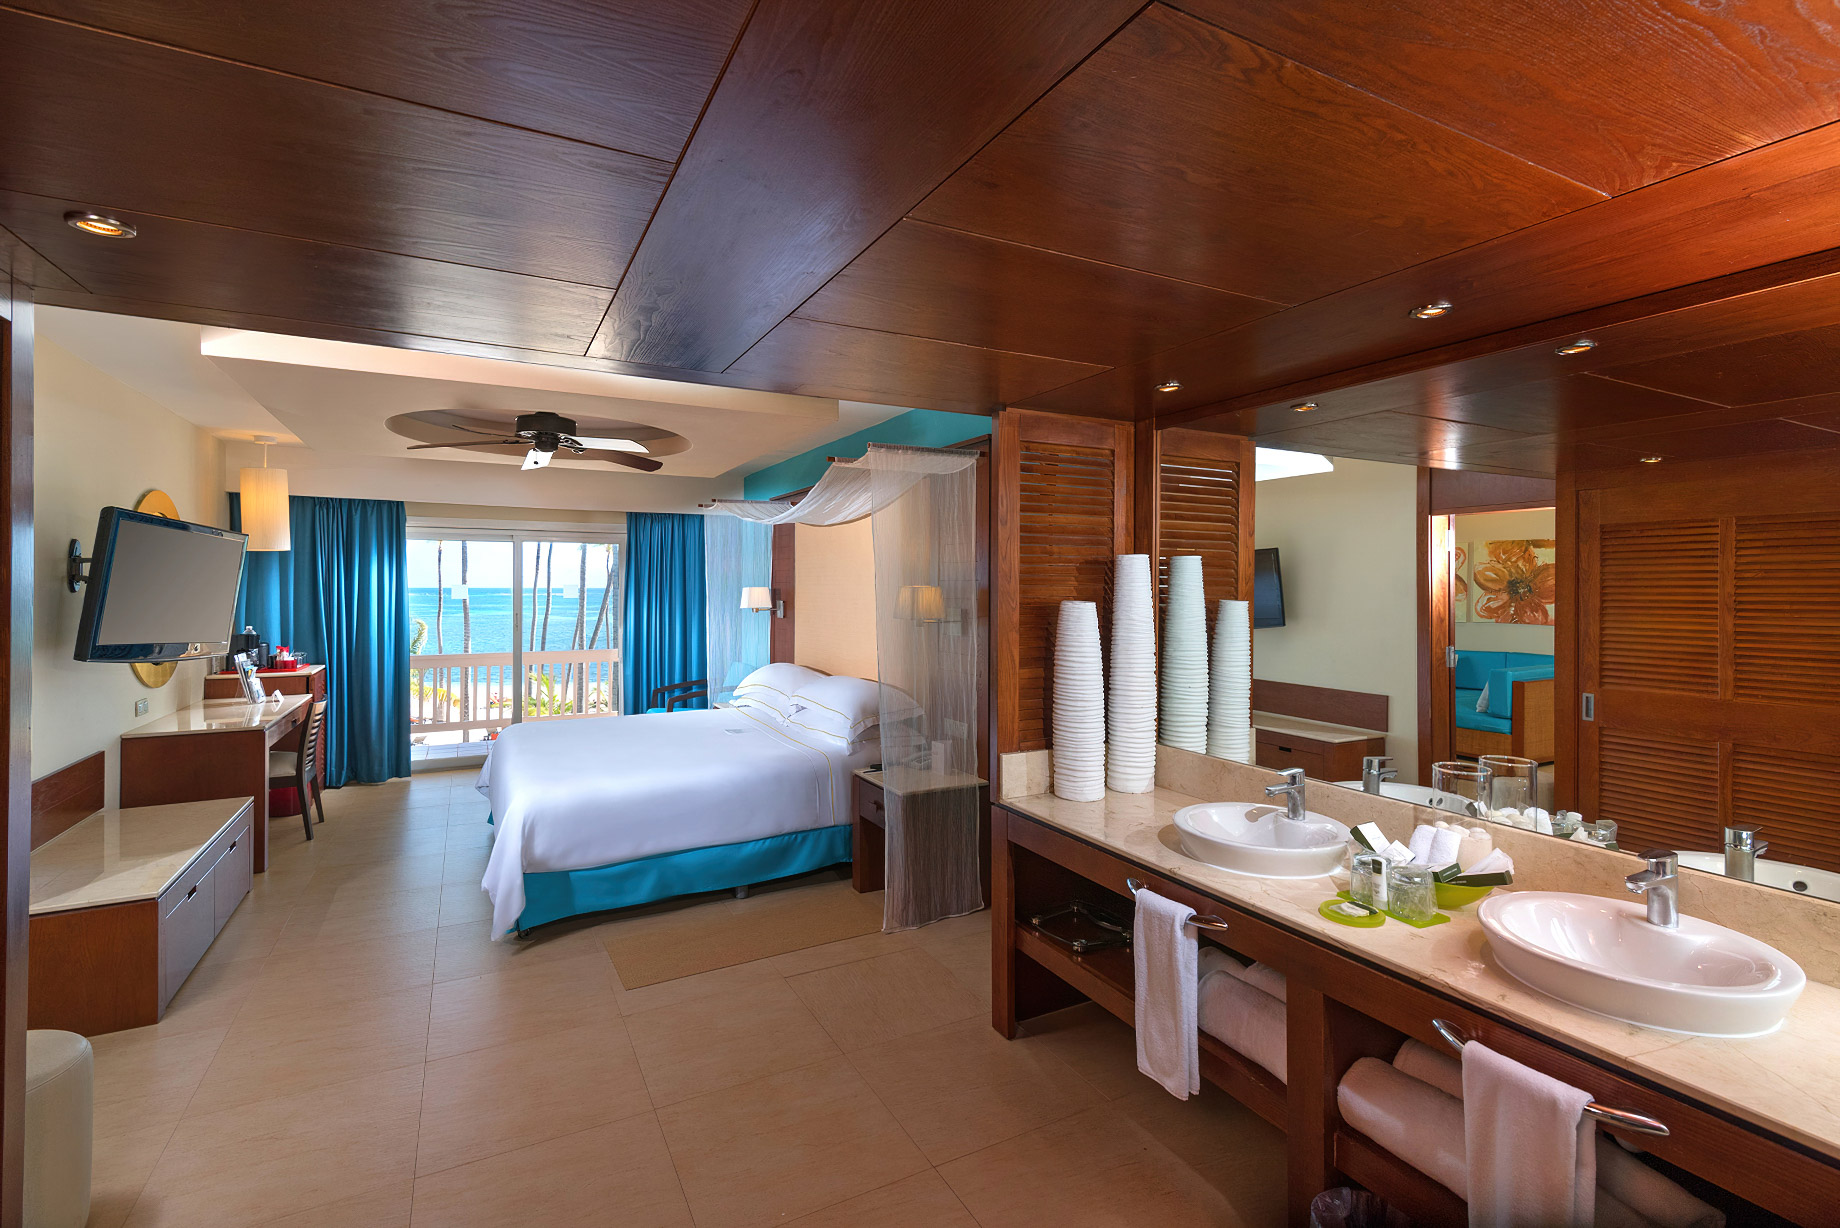 Barceló Bávaro Beach Hotel Grand Resort – Punta Cana, Dominican Republic – Premium Level Ocean Front Suite Room